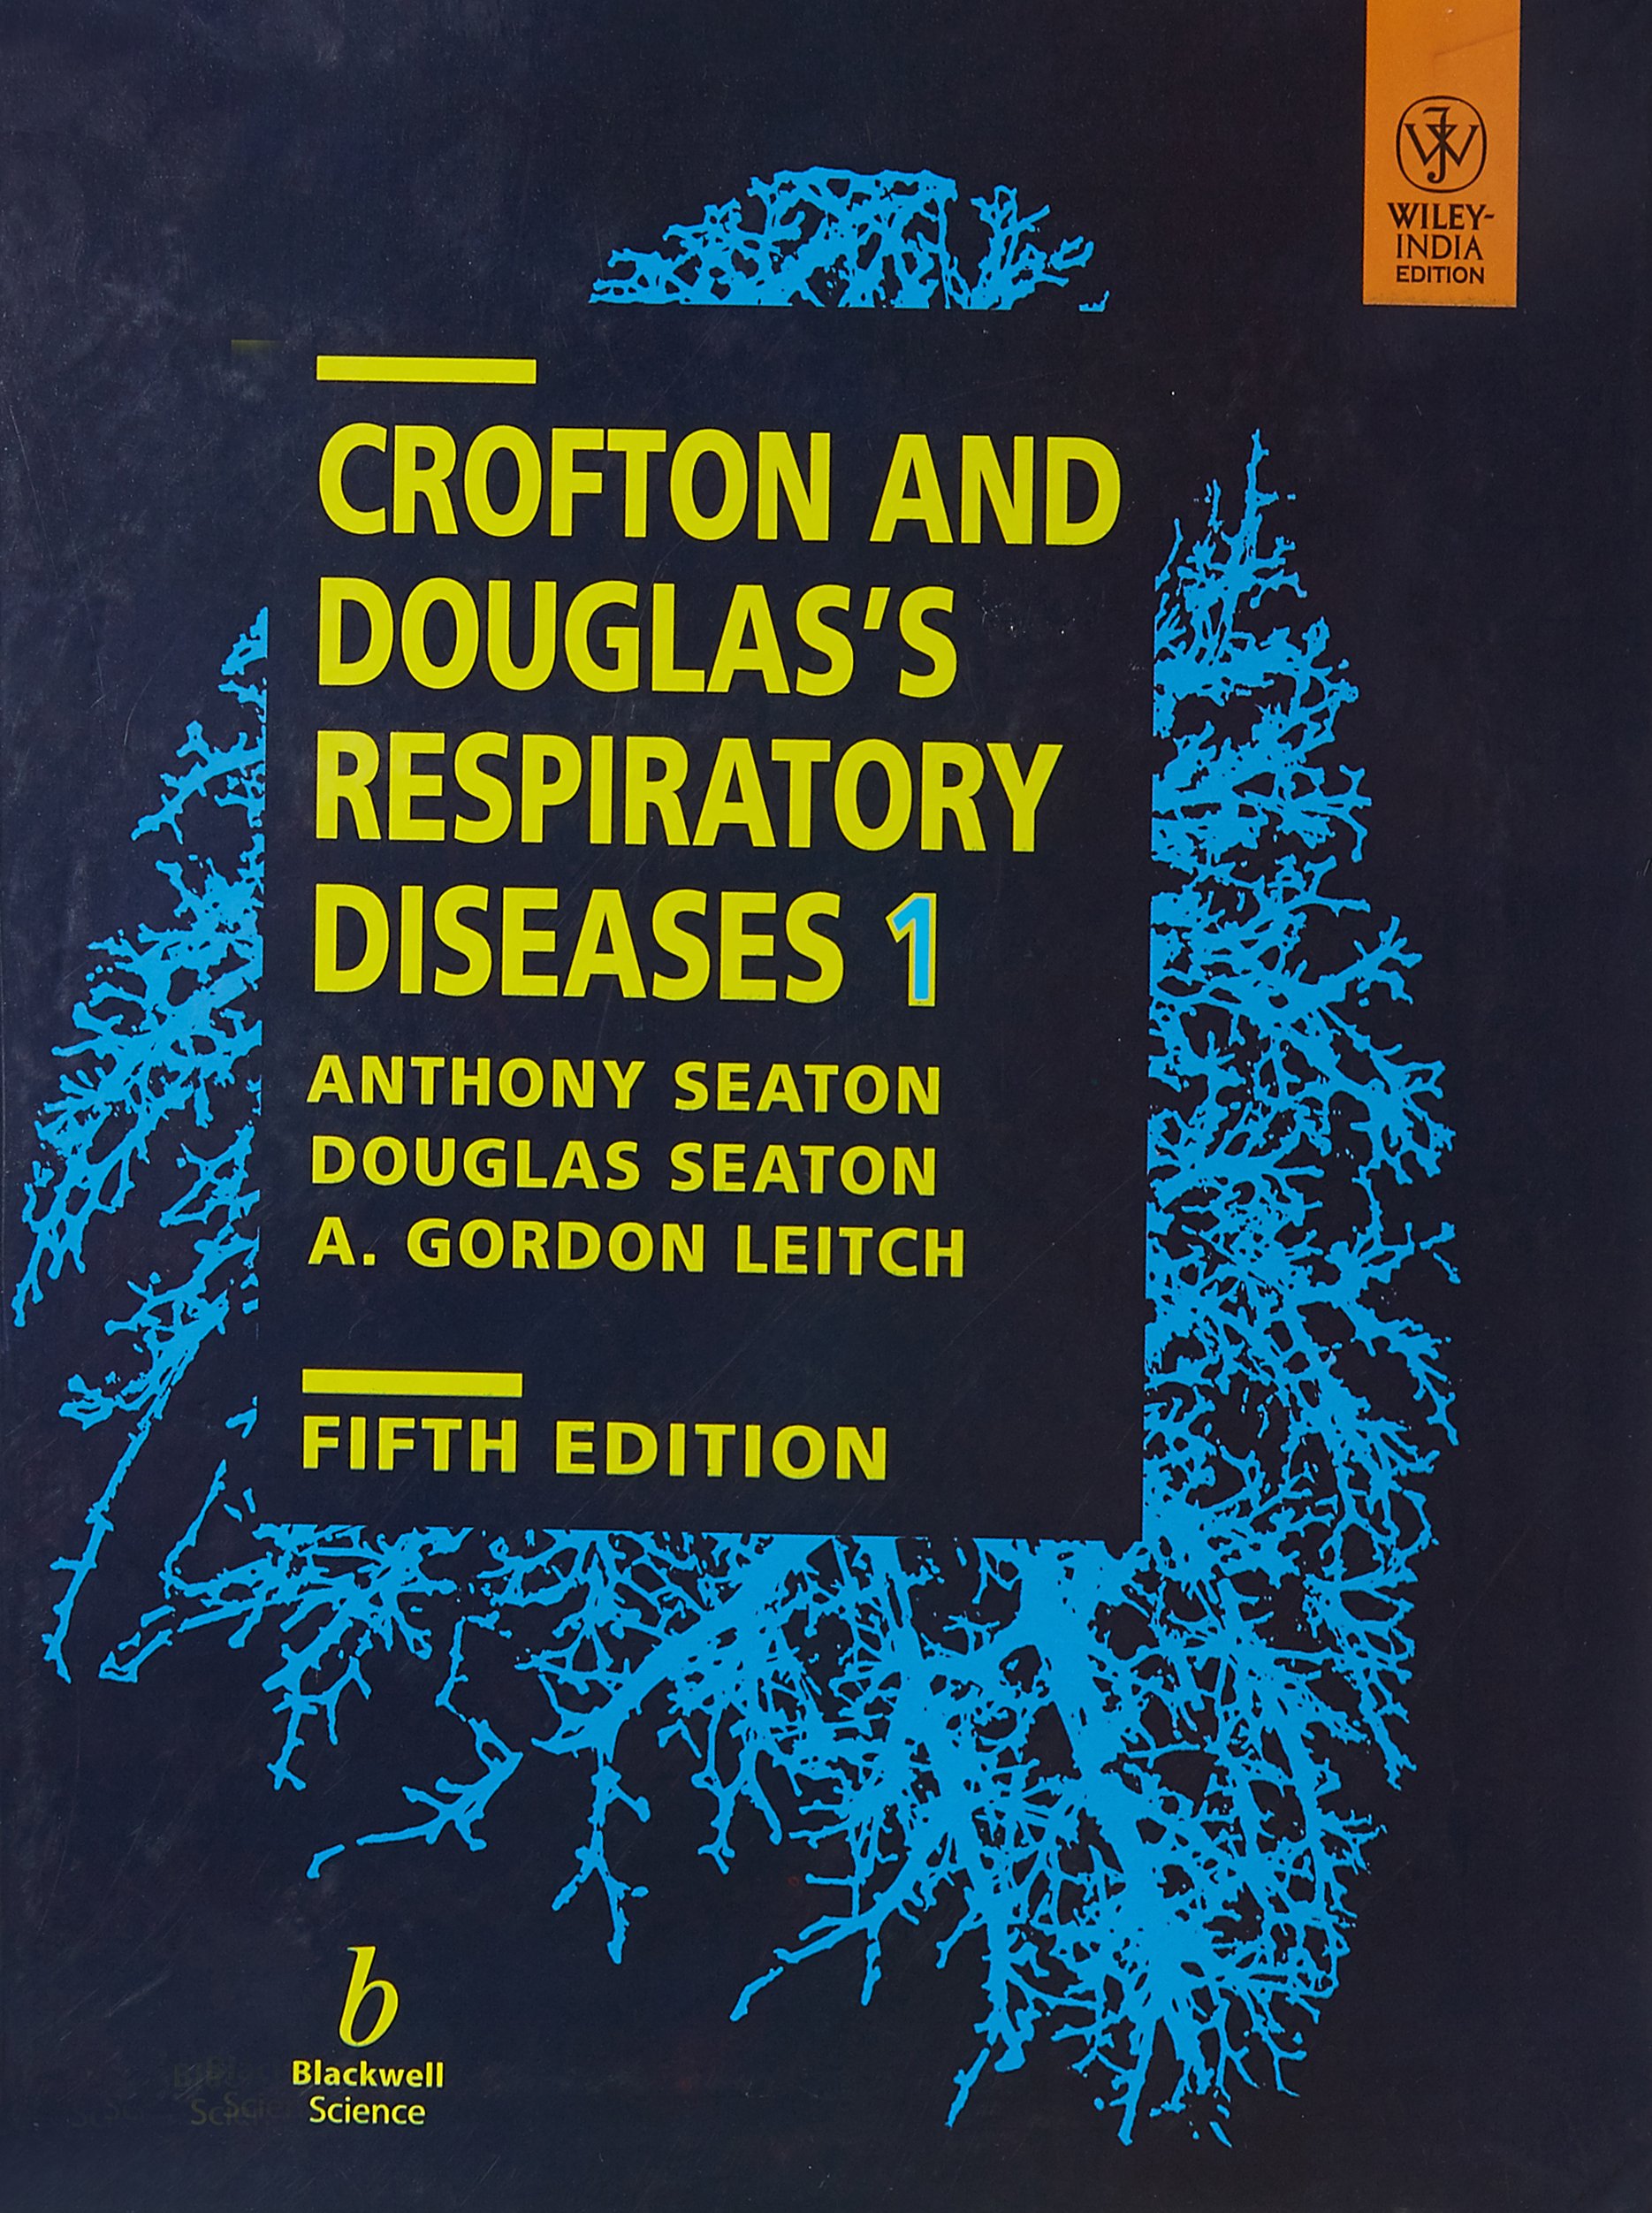 Crofton and Douglas’s Respiratory diseases